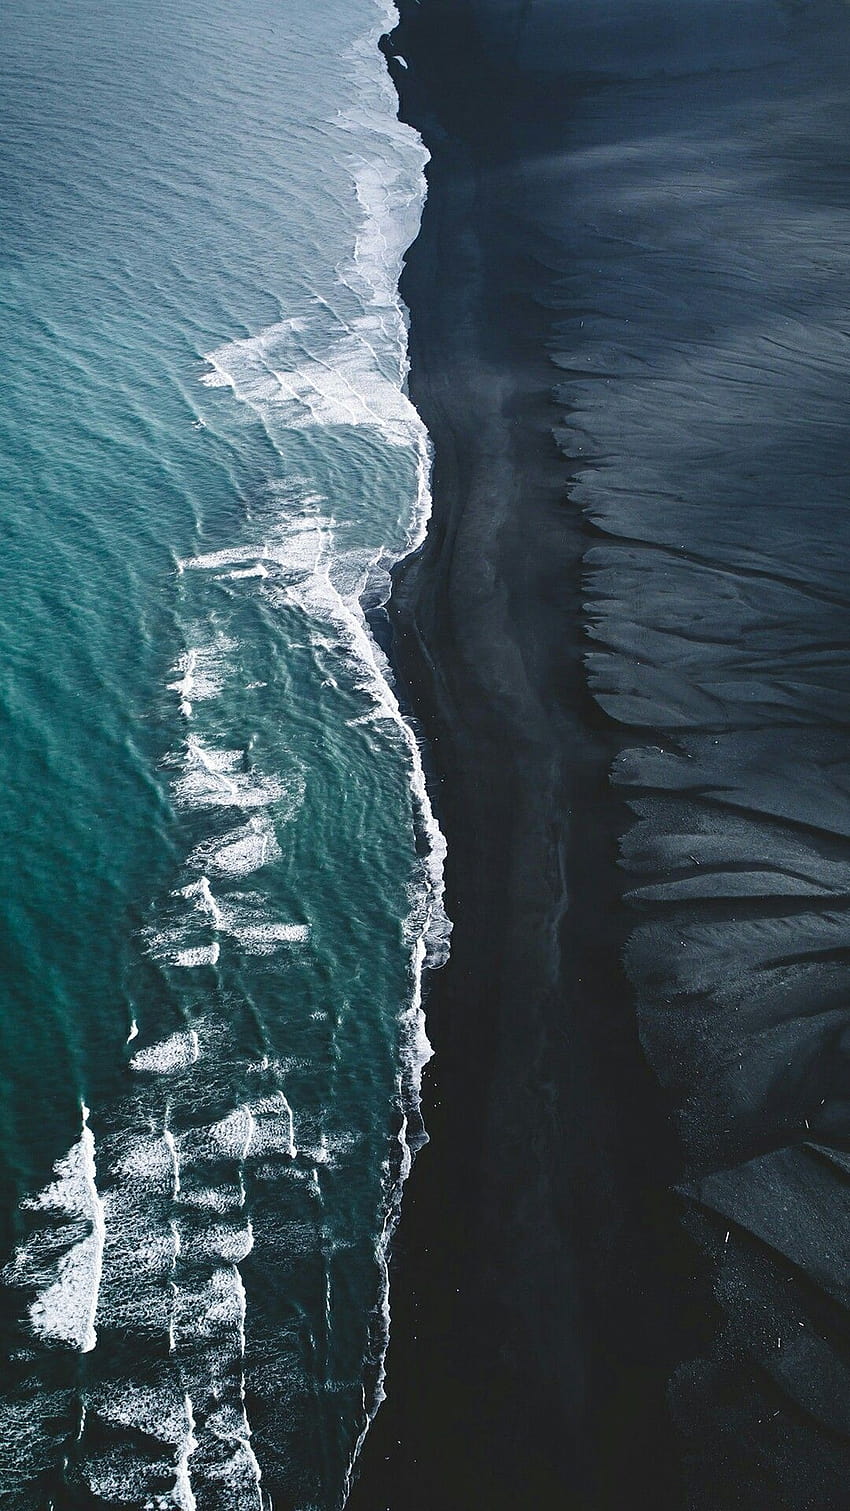 Playas de arena negra, playa de arena negra islandia fondo de pantalla del teléfono